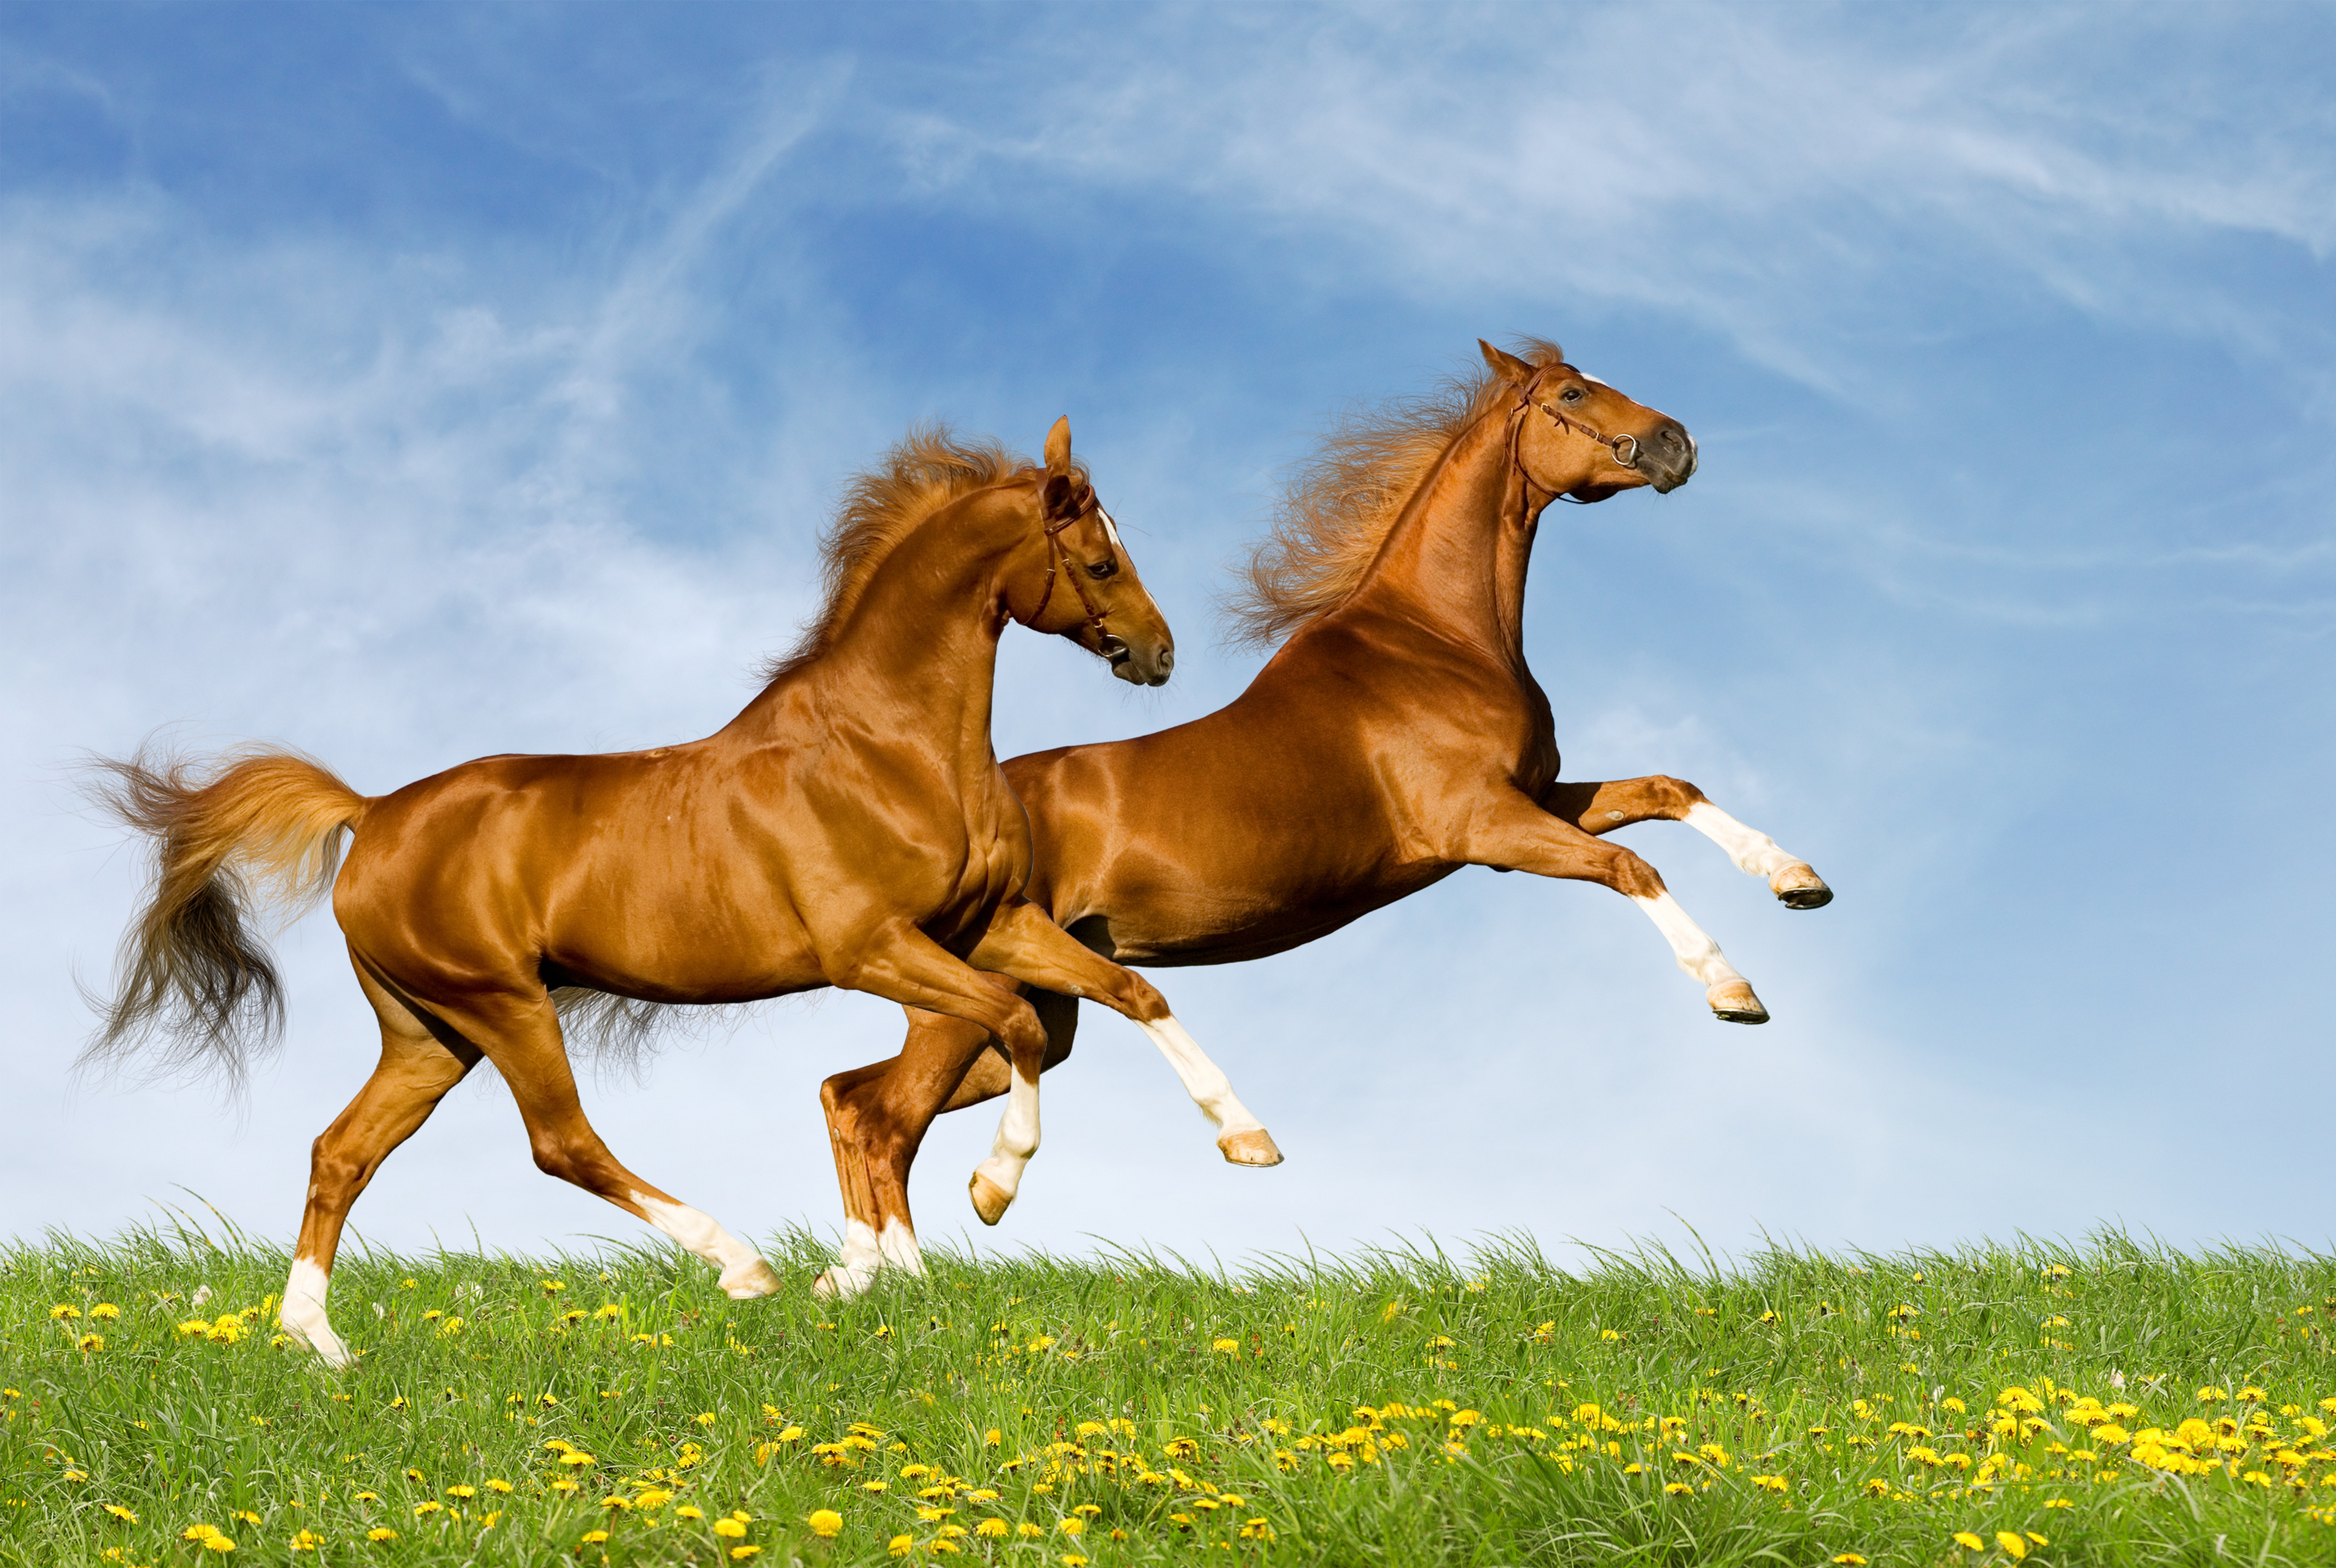 134463 descargar imagen caballos, animales, naturaleza, verano, pareja, par, rebotar, saltar: fondos de pantalla y protectores de pantalla gratis